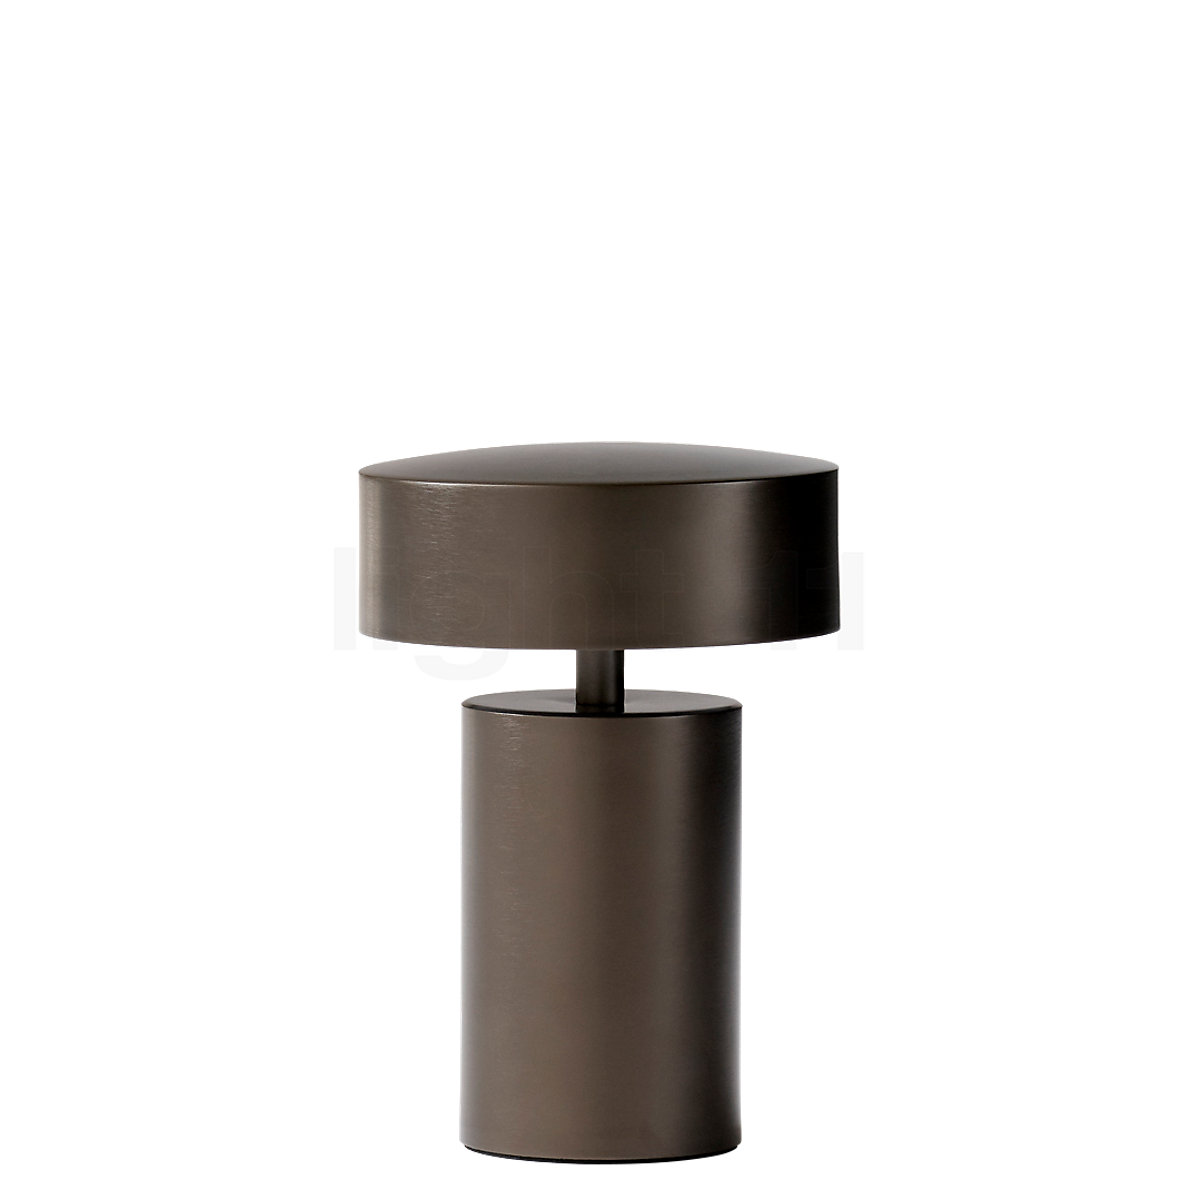 bronze table lamp